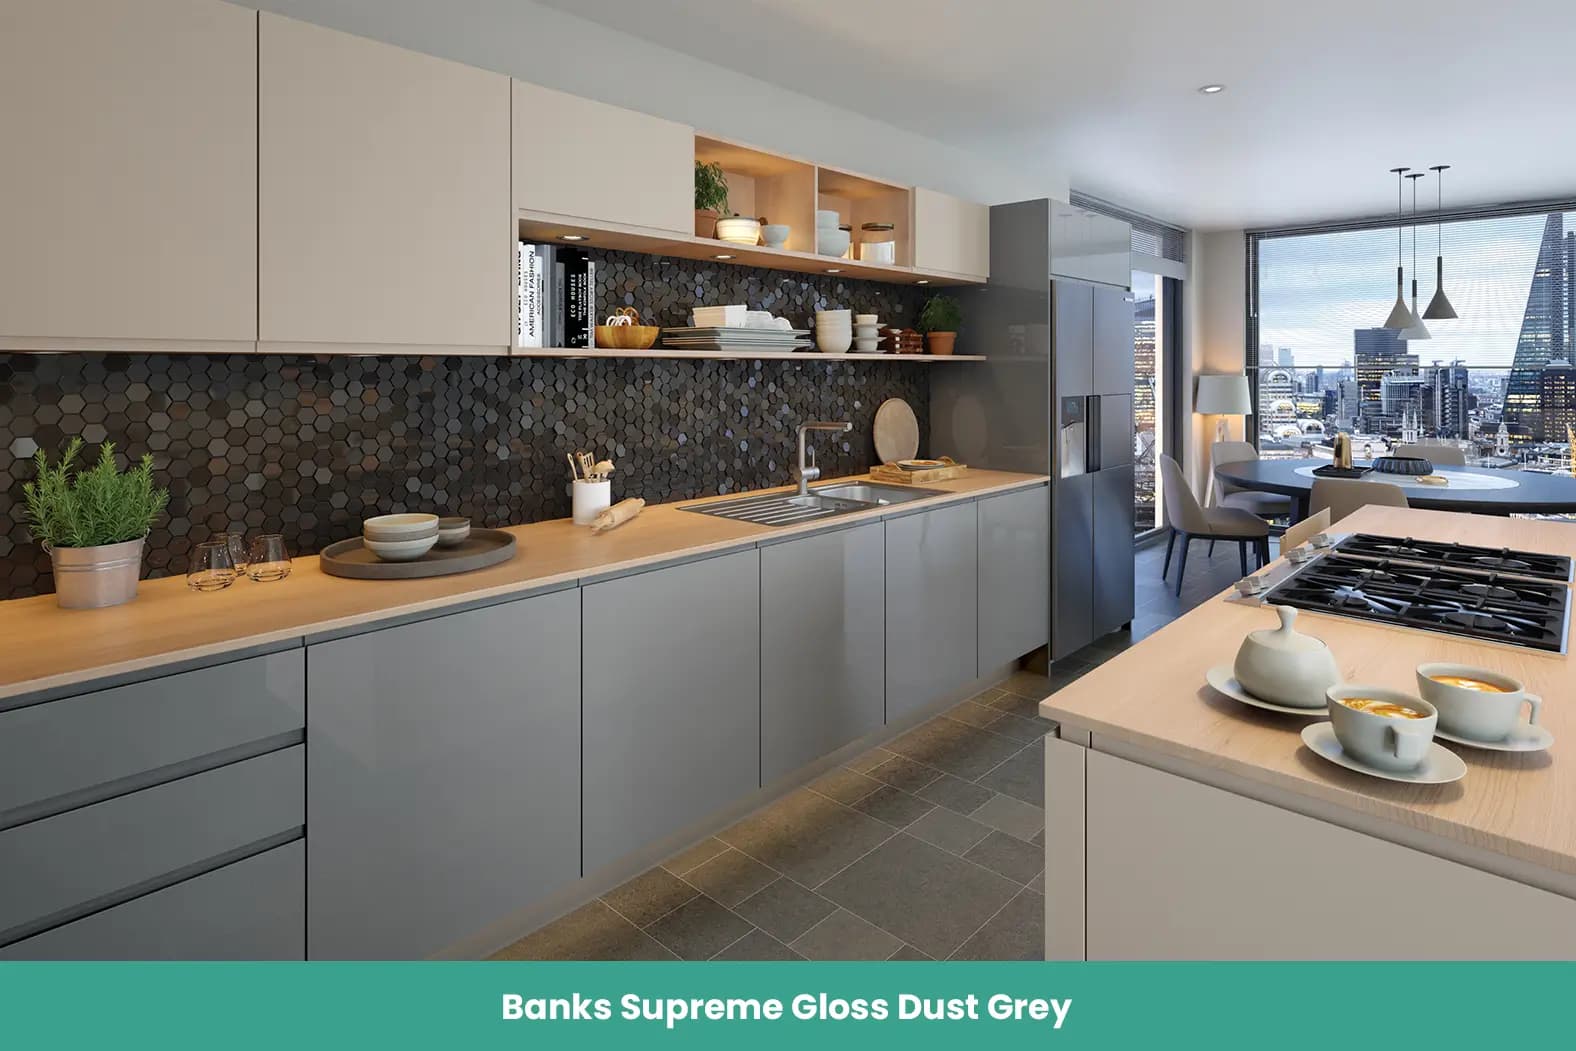 Banks Supreme Gloss Dust Grey Kitchen